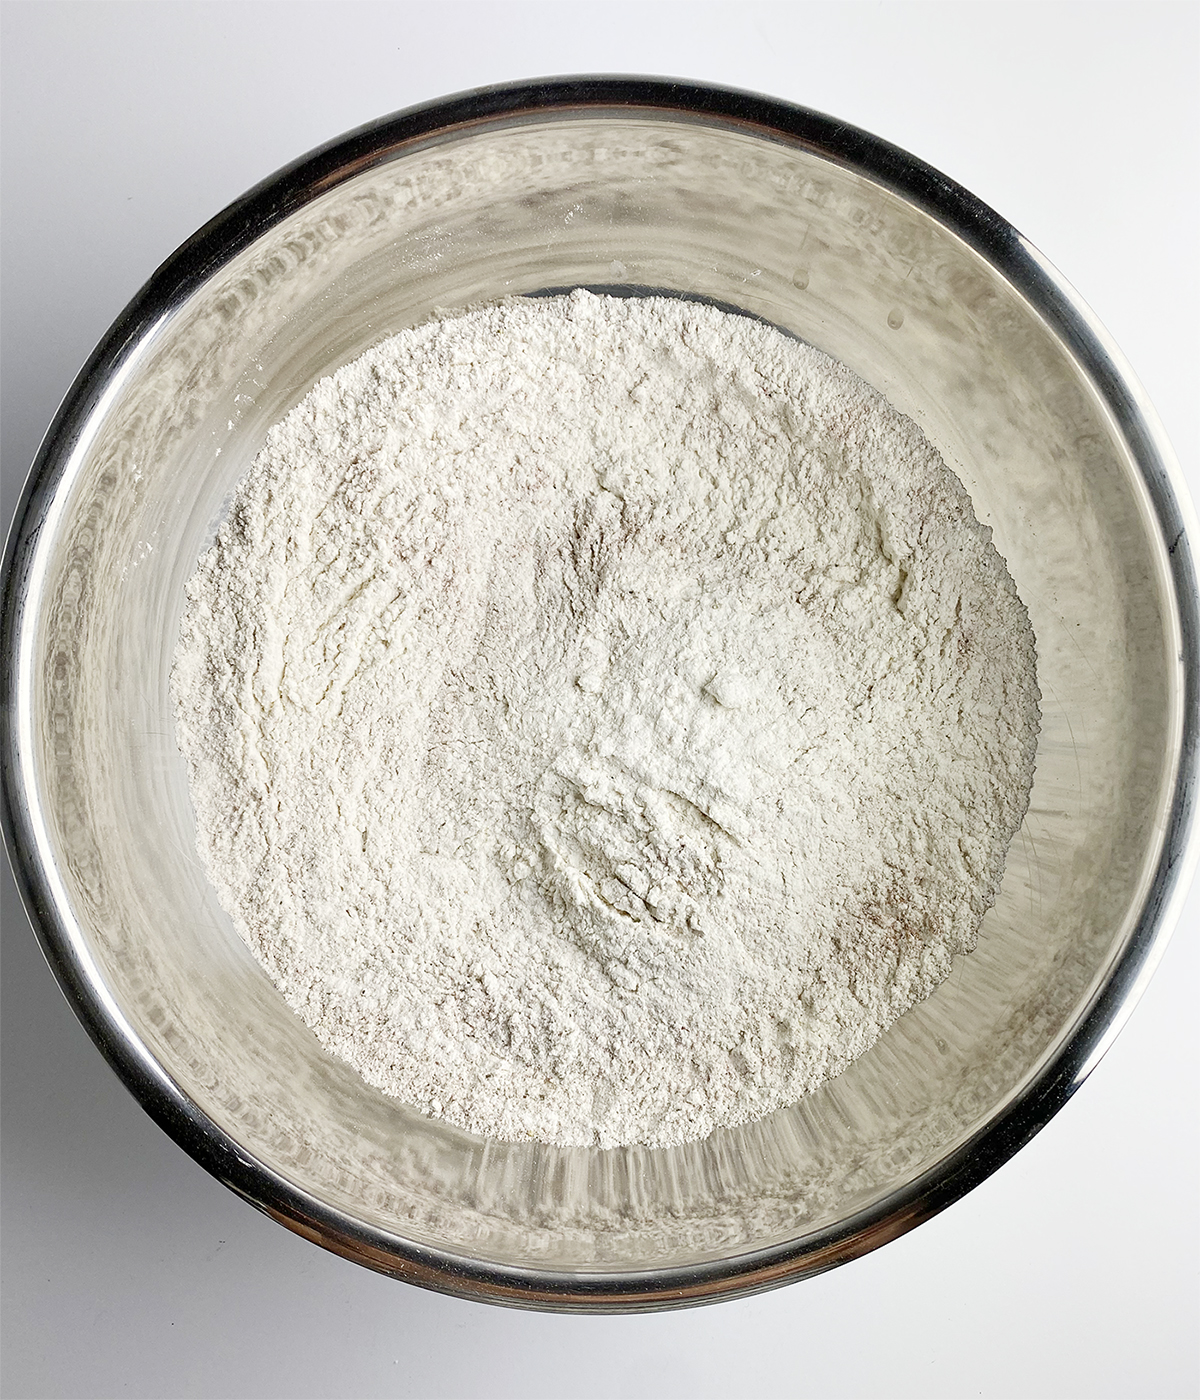 Flour mixture in a metal bowl.